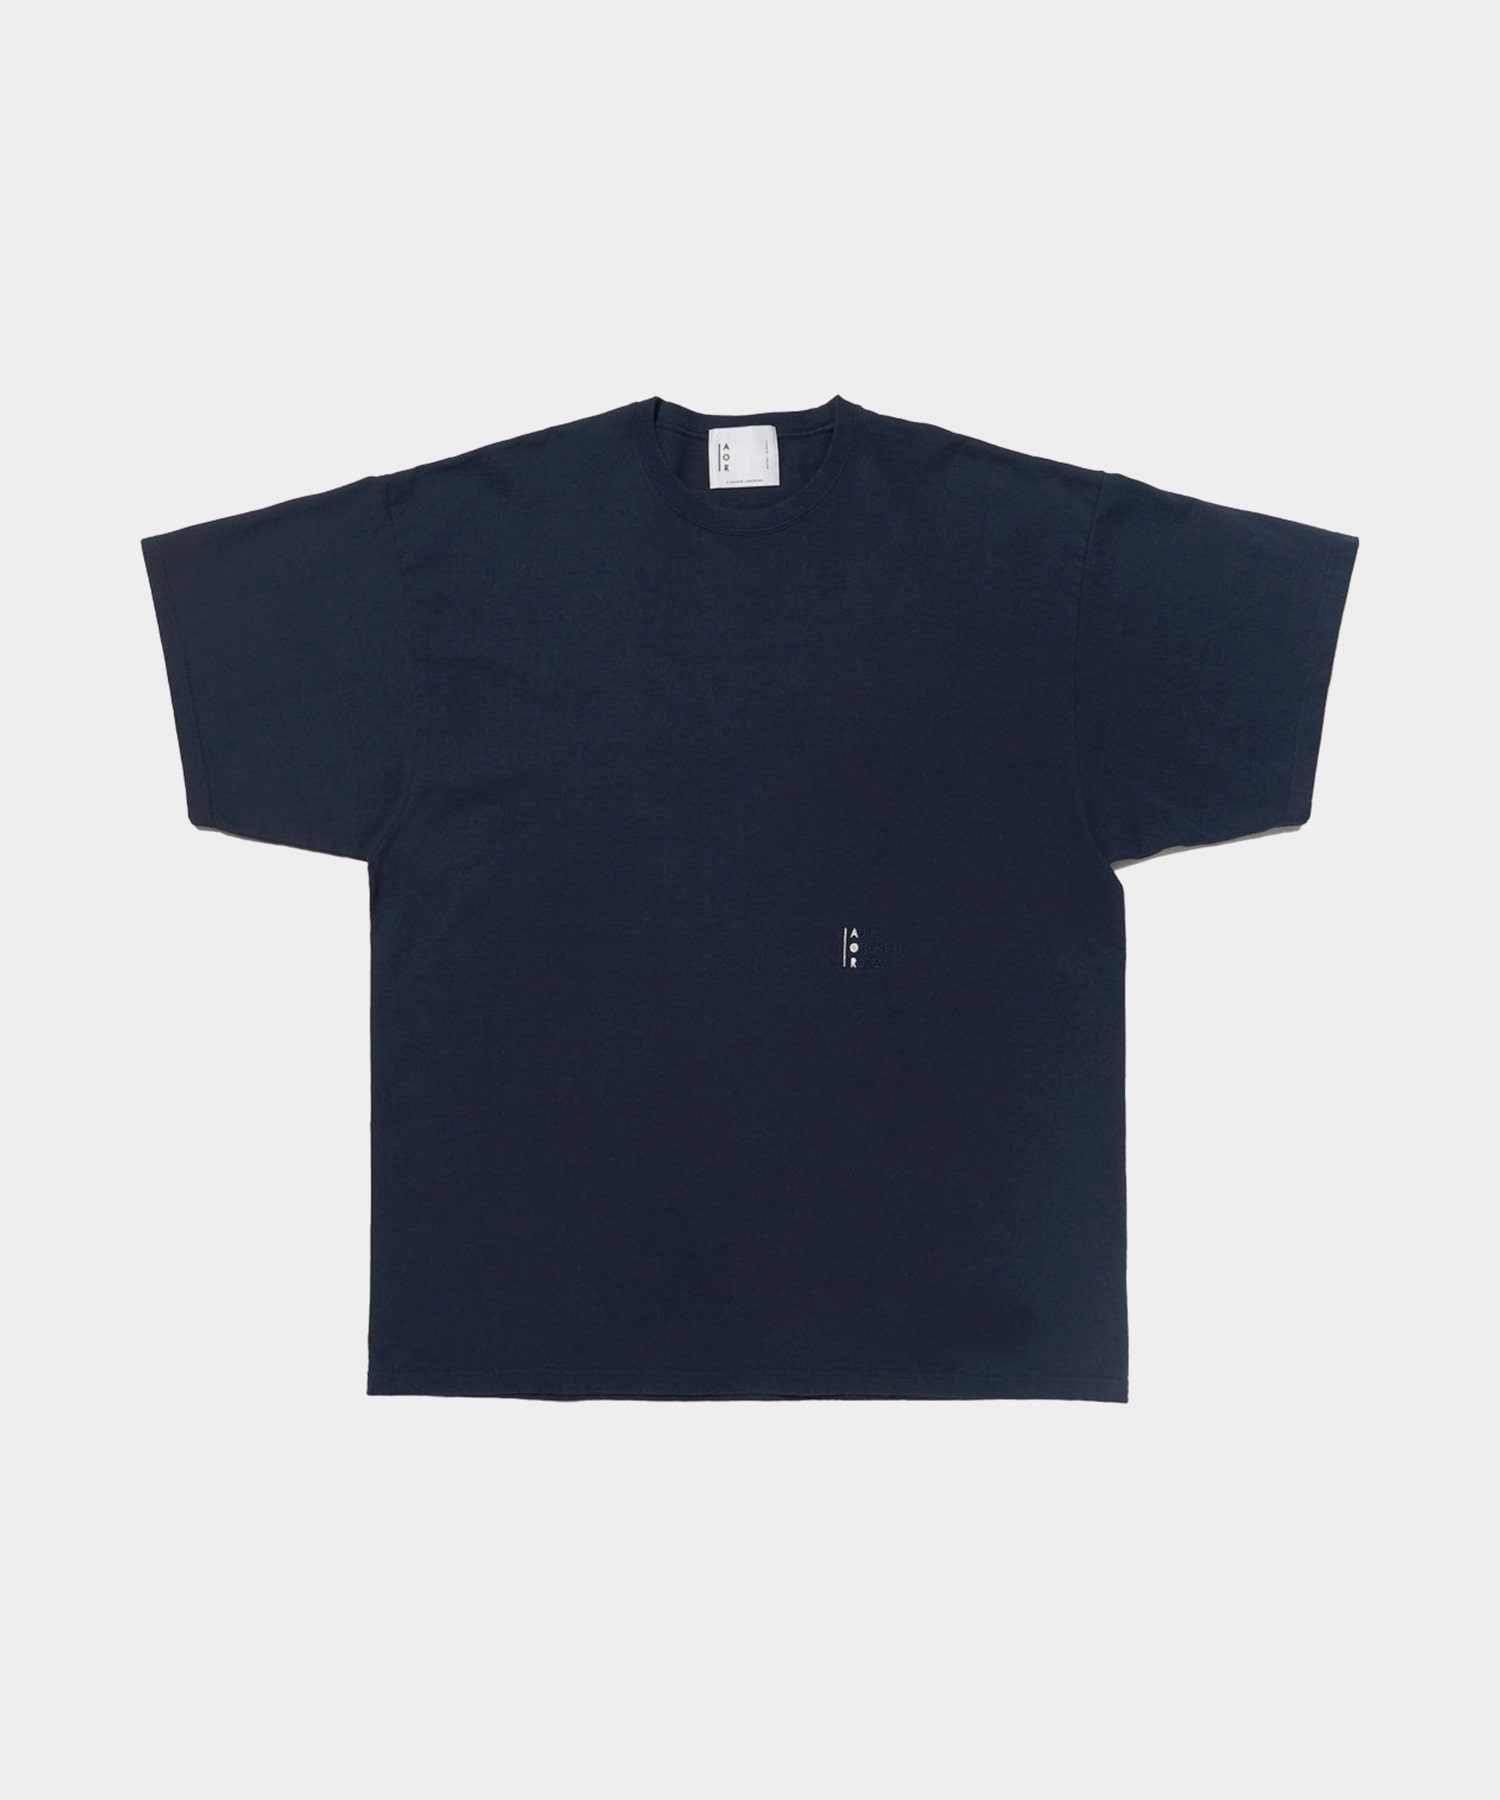 S/S T-shirt (Navy)